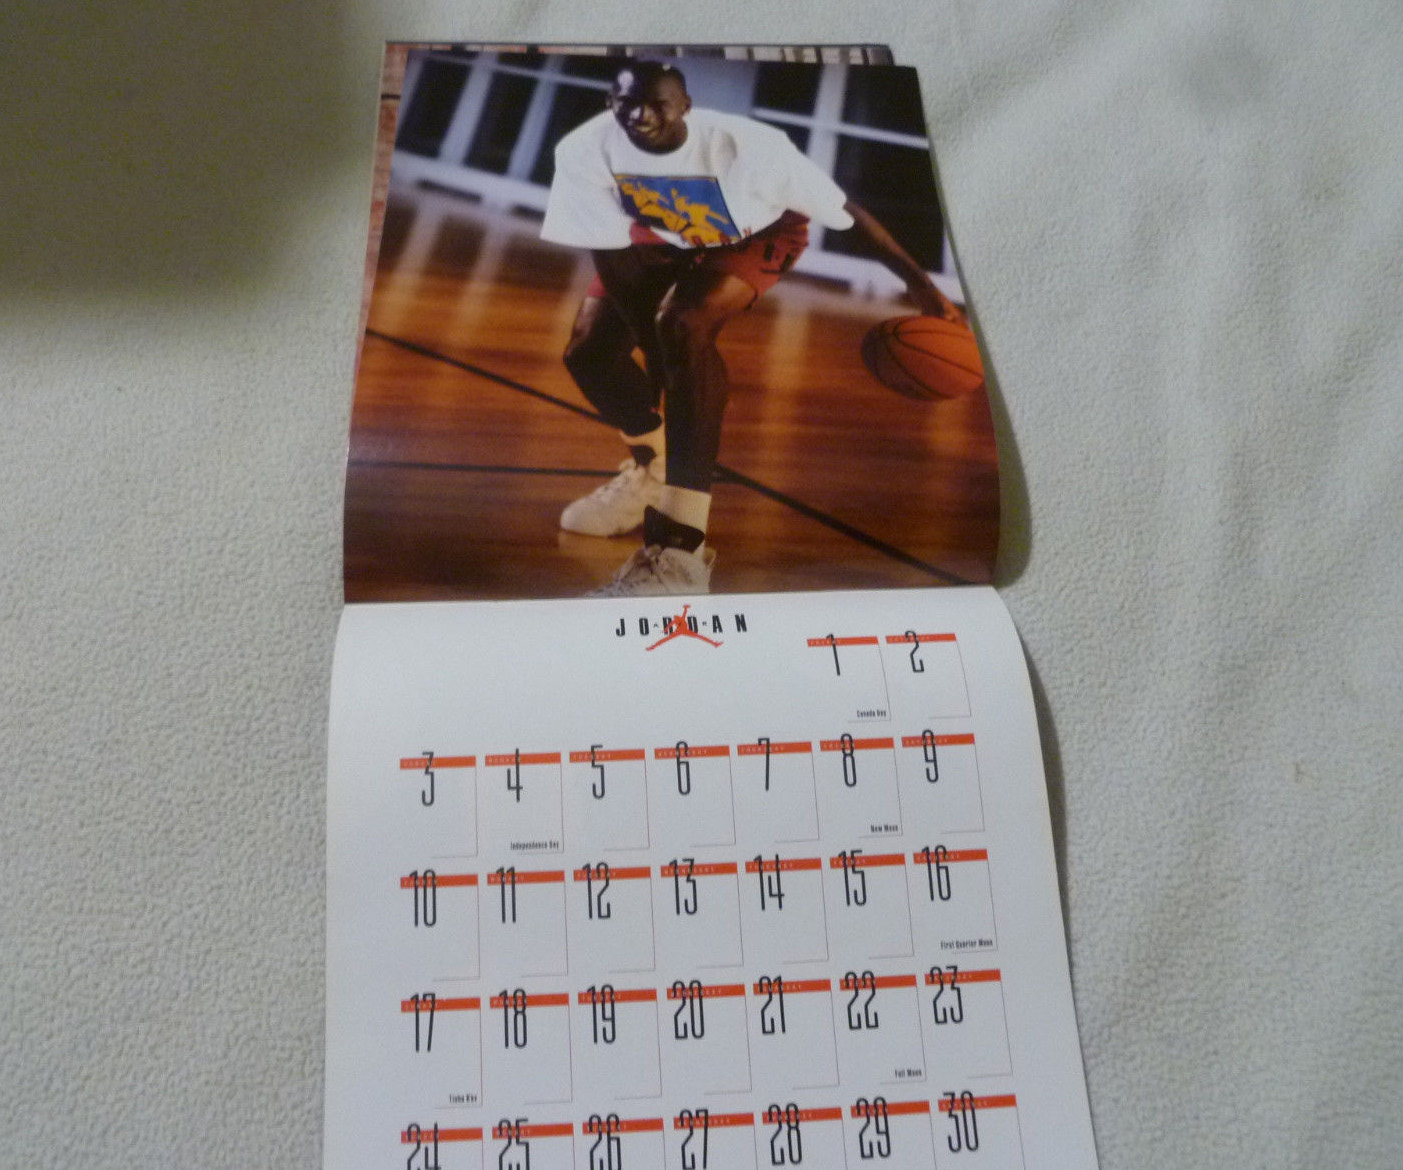 Vintage Gear Air Jordan Calendar For MJ's Retirement Season Air